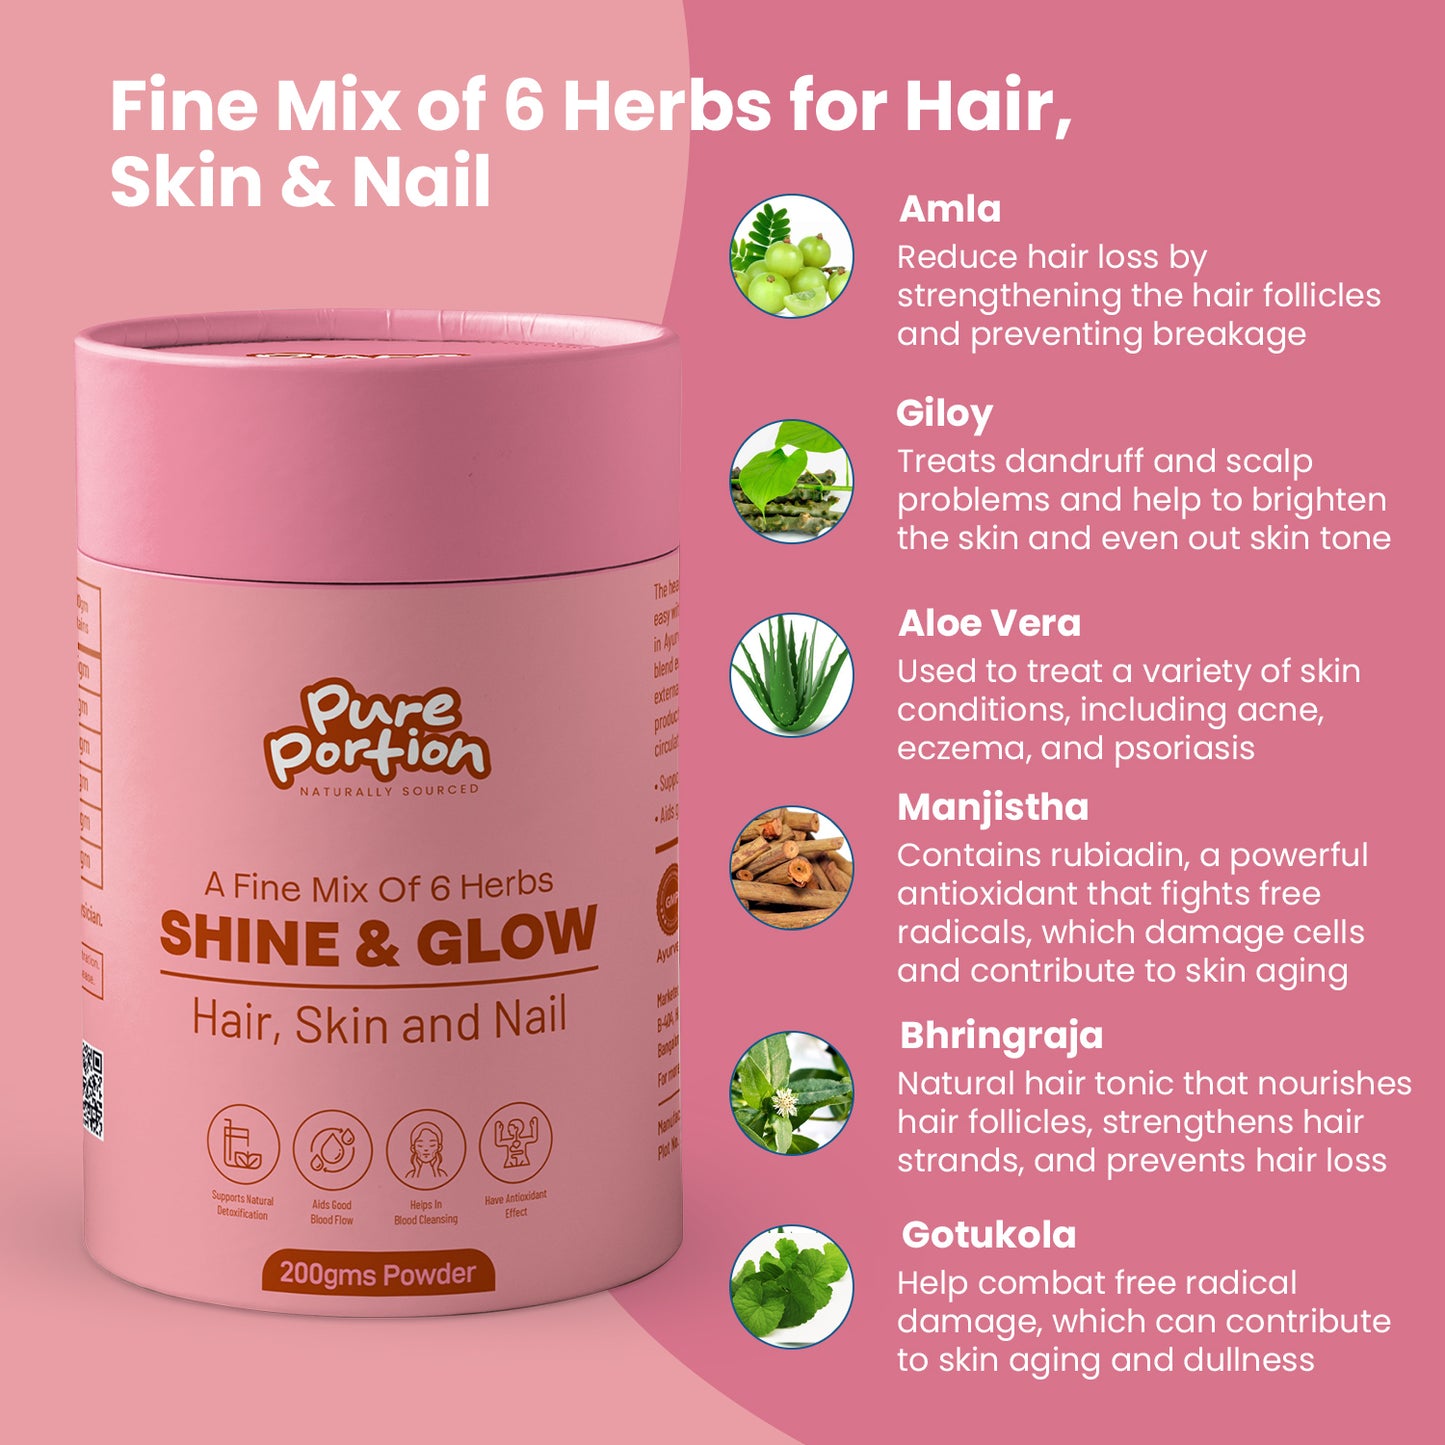 Shine & Glow - Hair, Skin & Nail, Healthy Hair care and Improved Skin Health